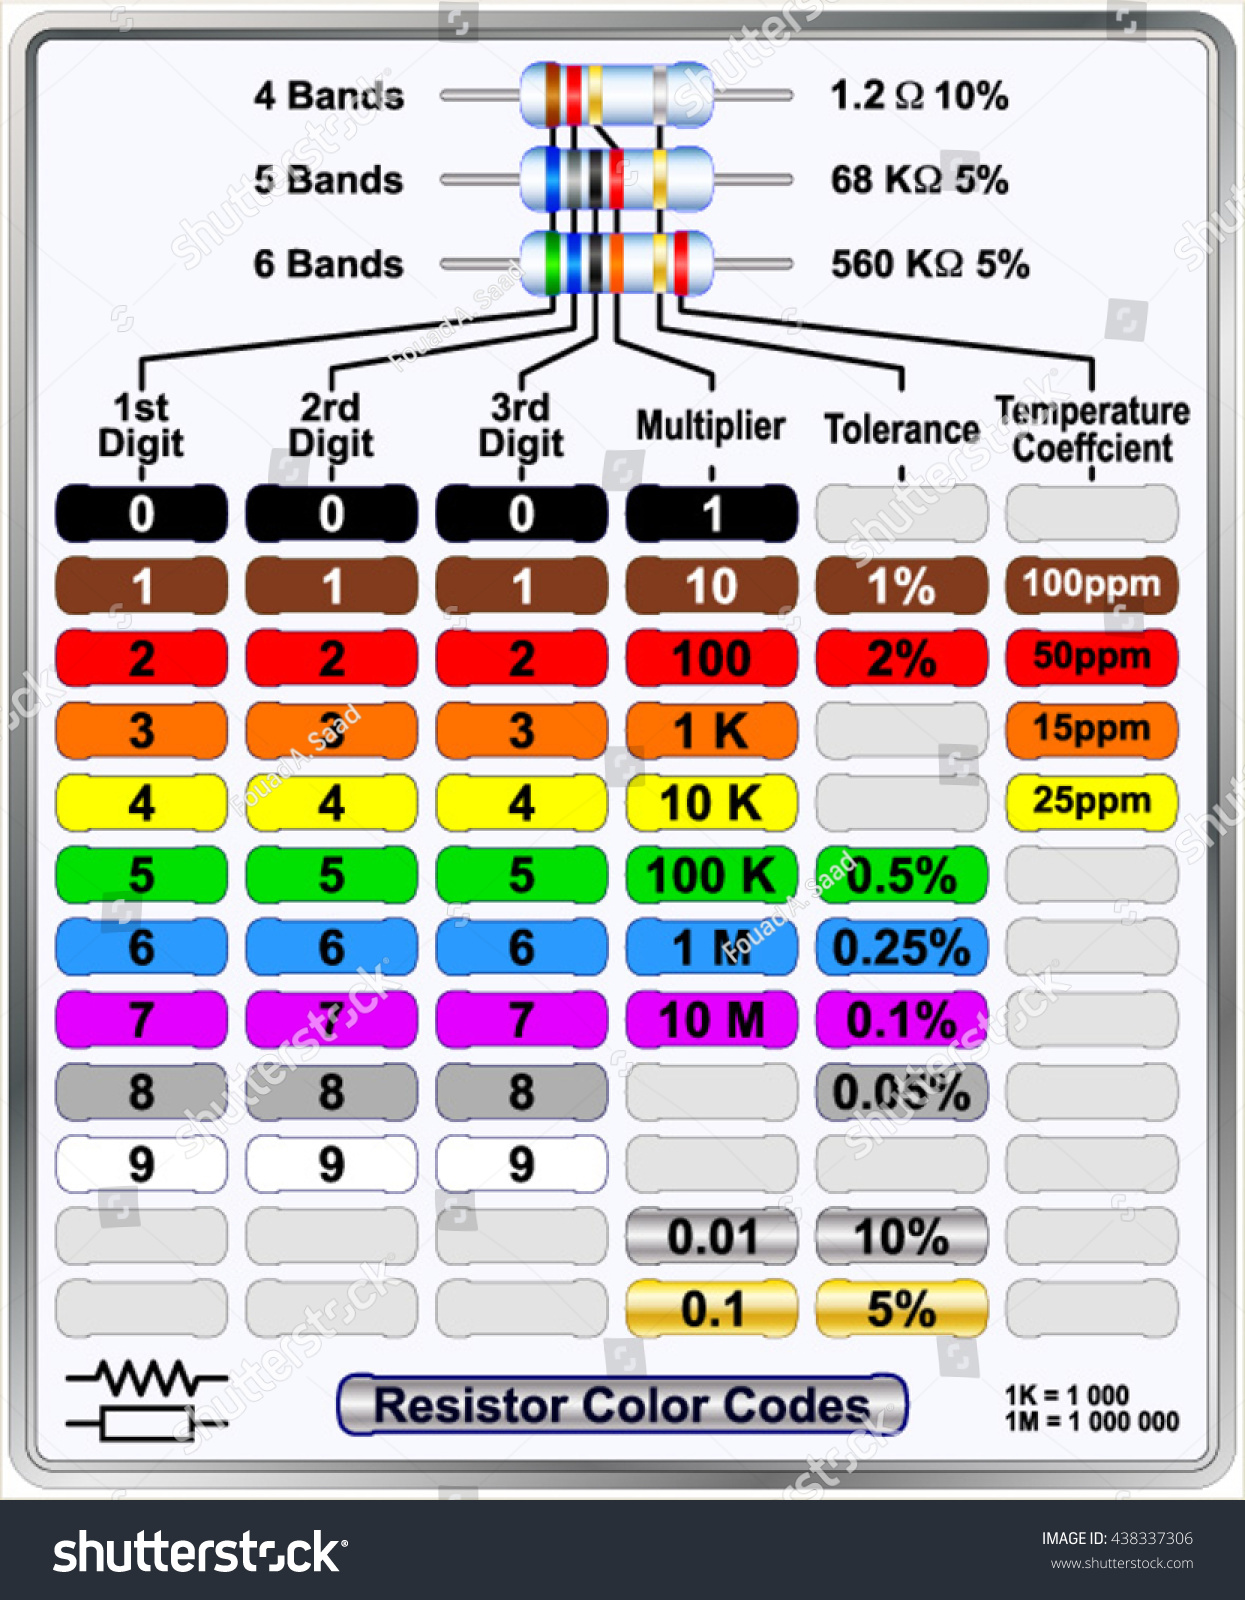 Resistor Color Codes Arkivvektor (royaltyfri) 438337306 Shutterstock.